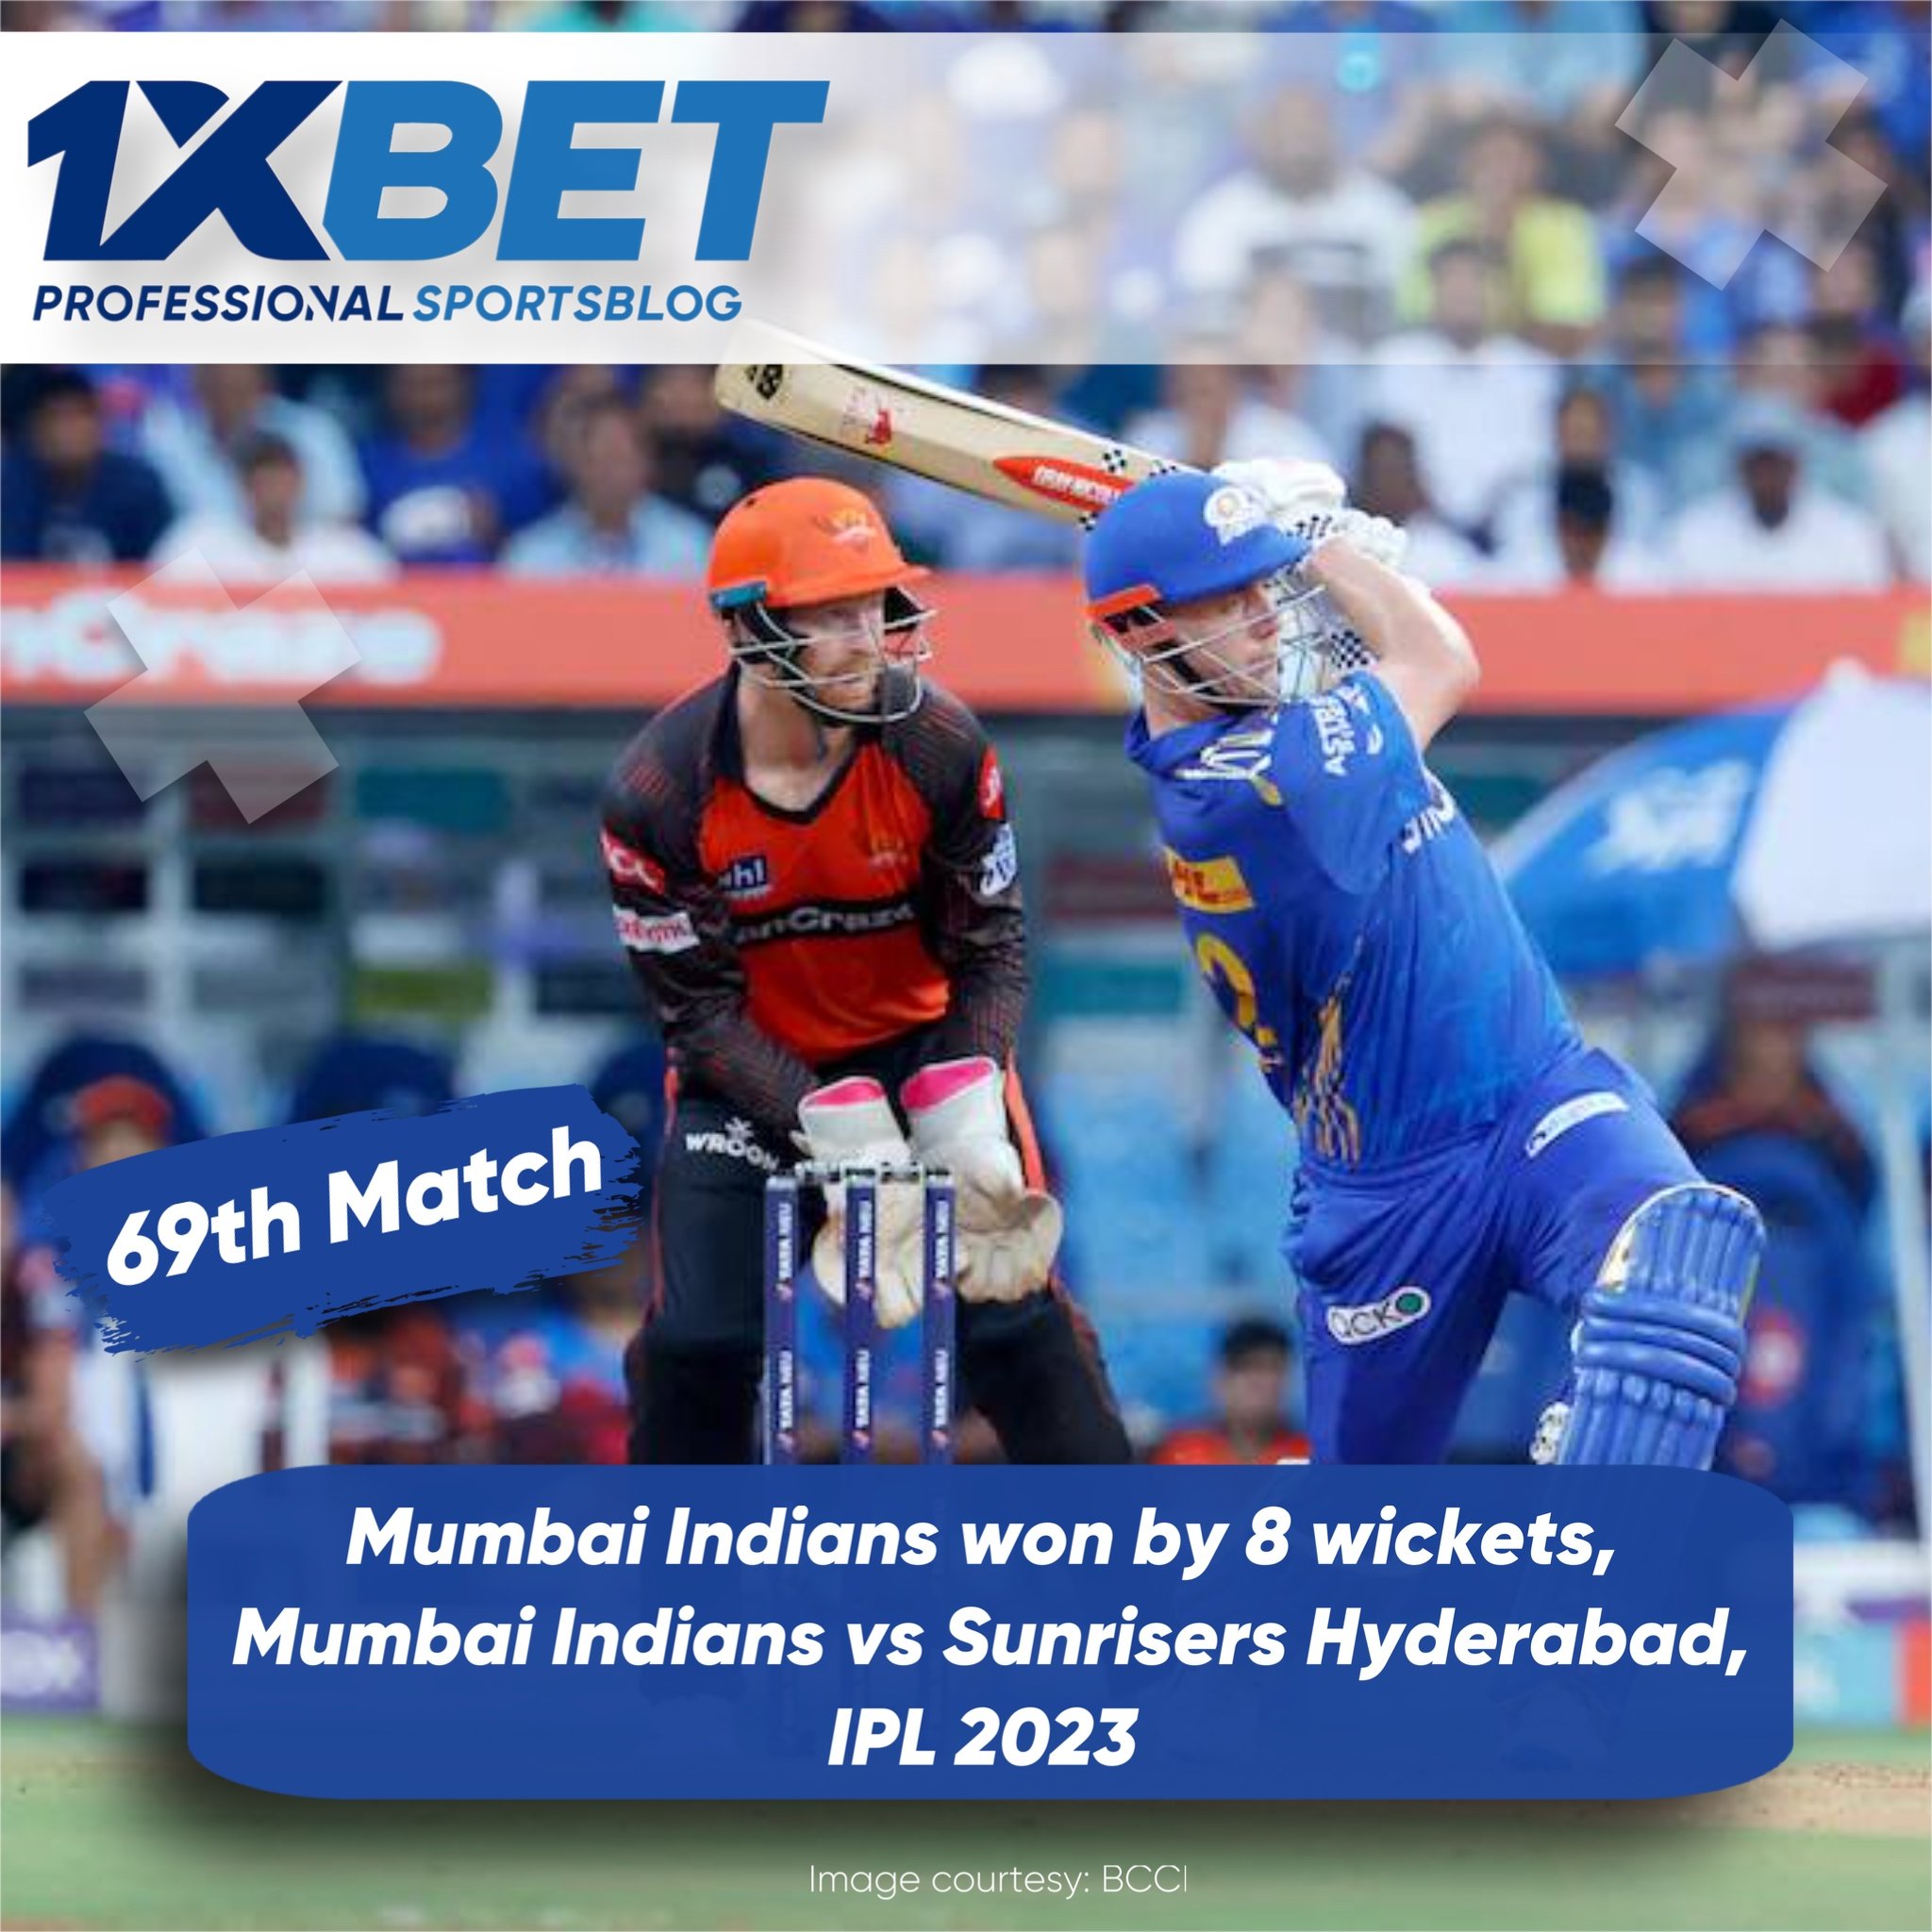 Mumbai Indians won by 8 wickets